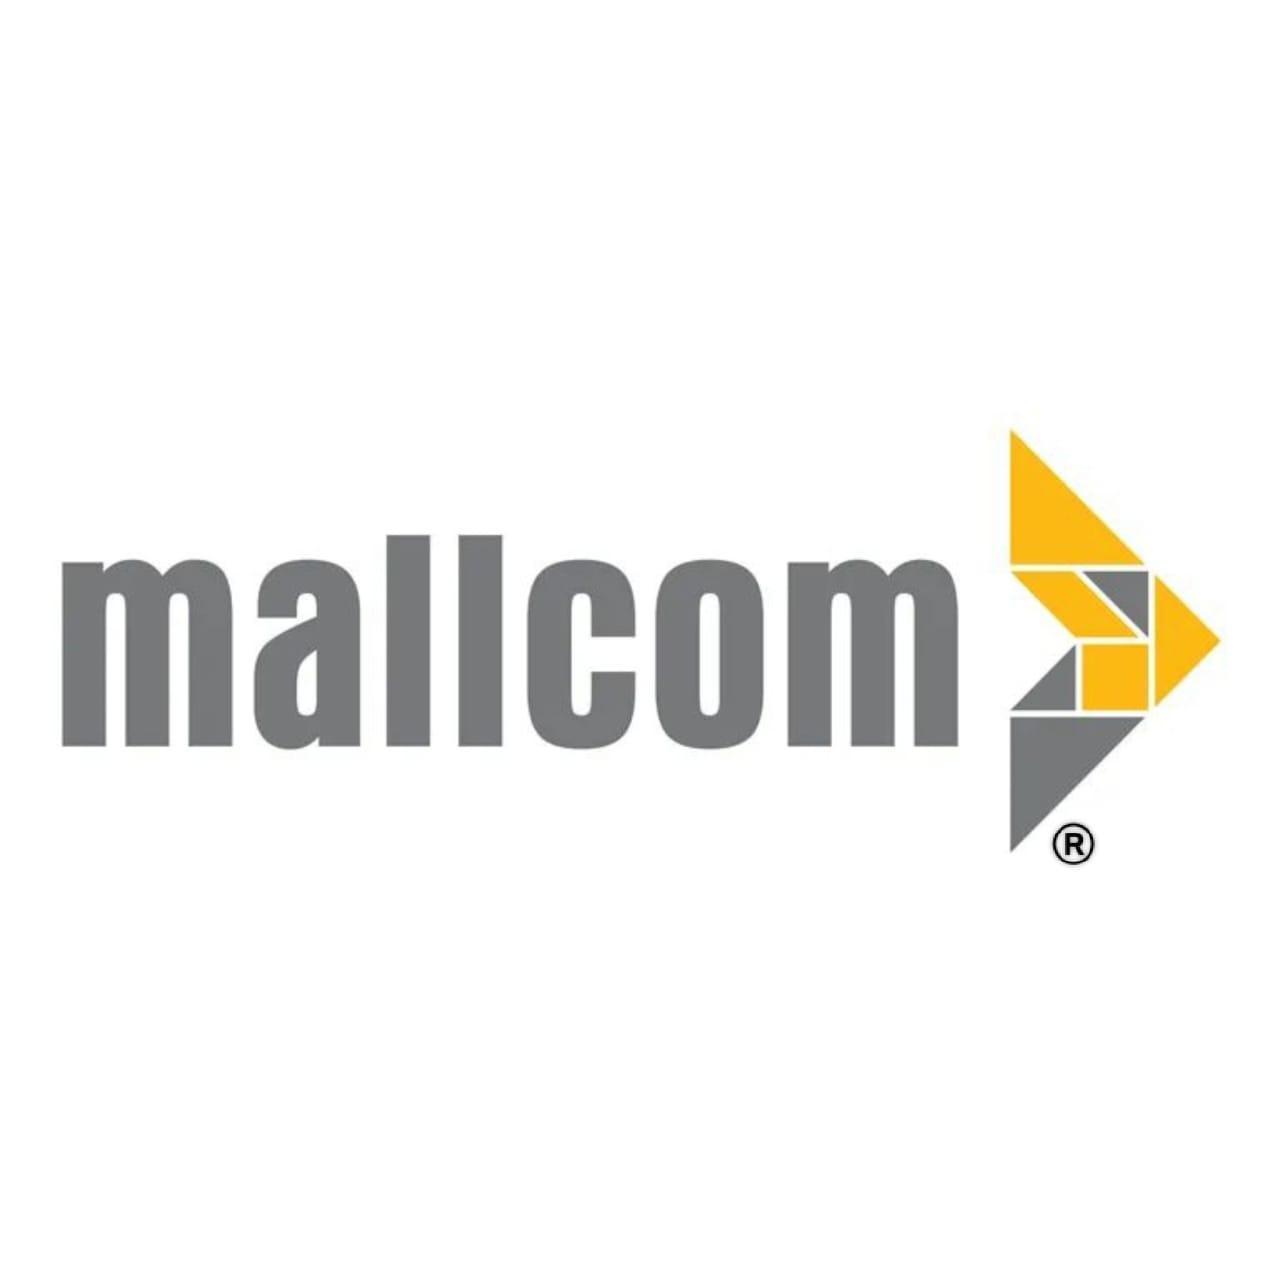 Mallcom India